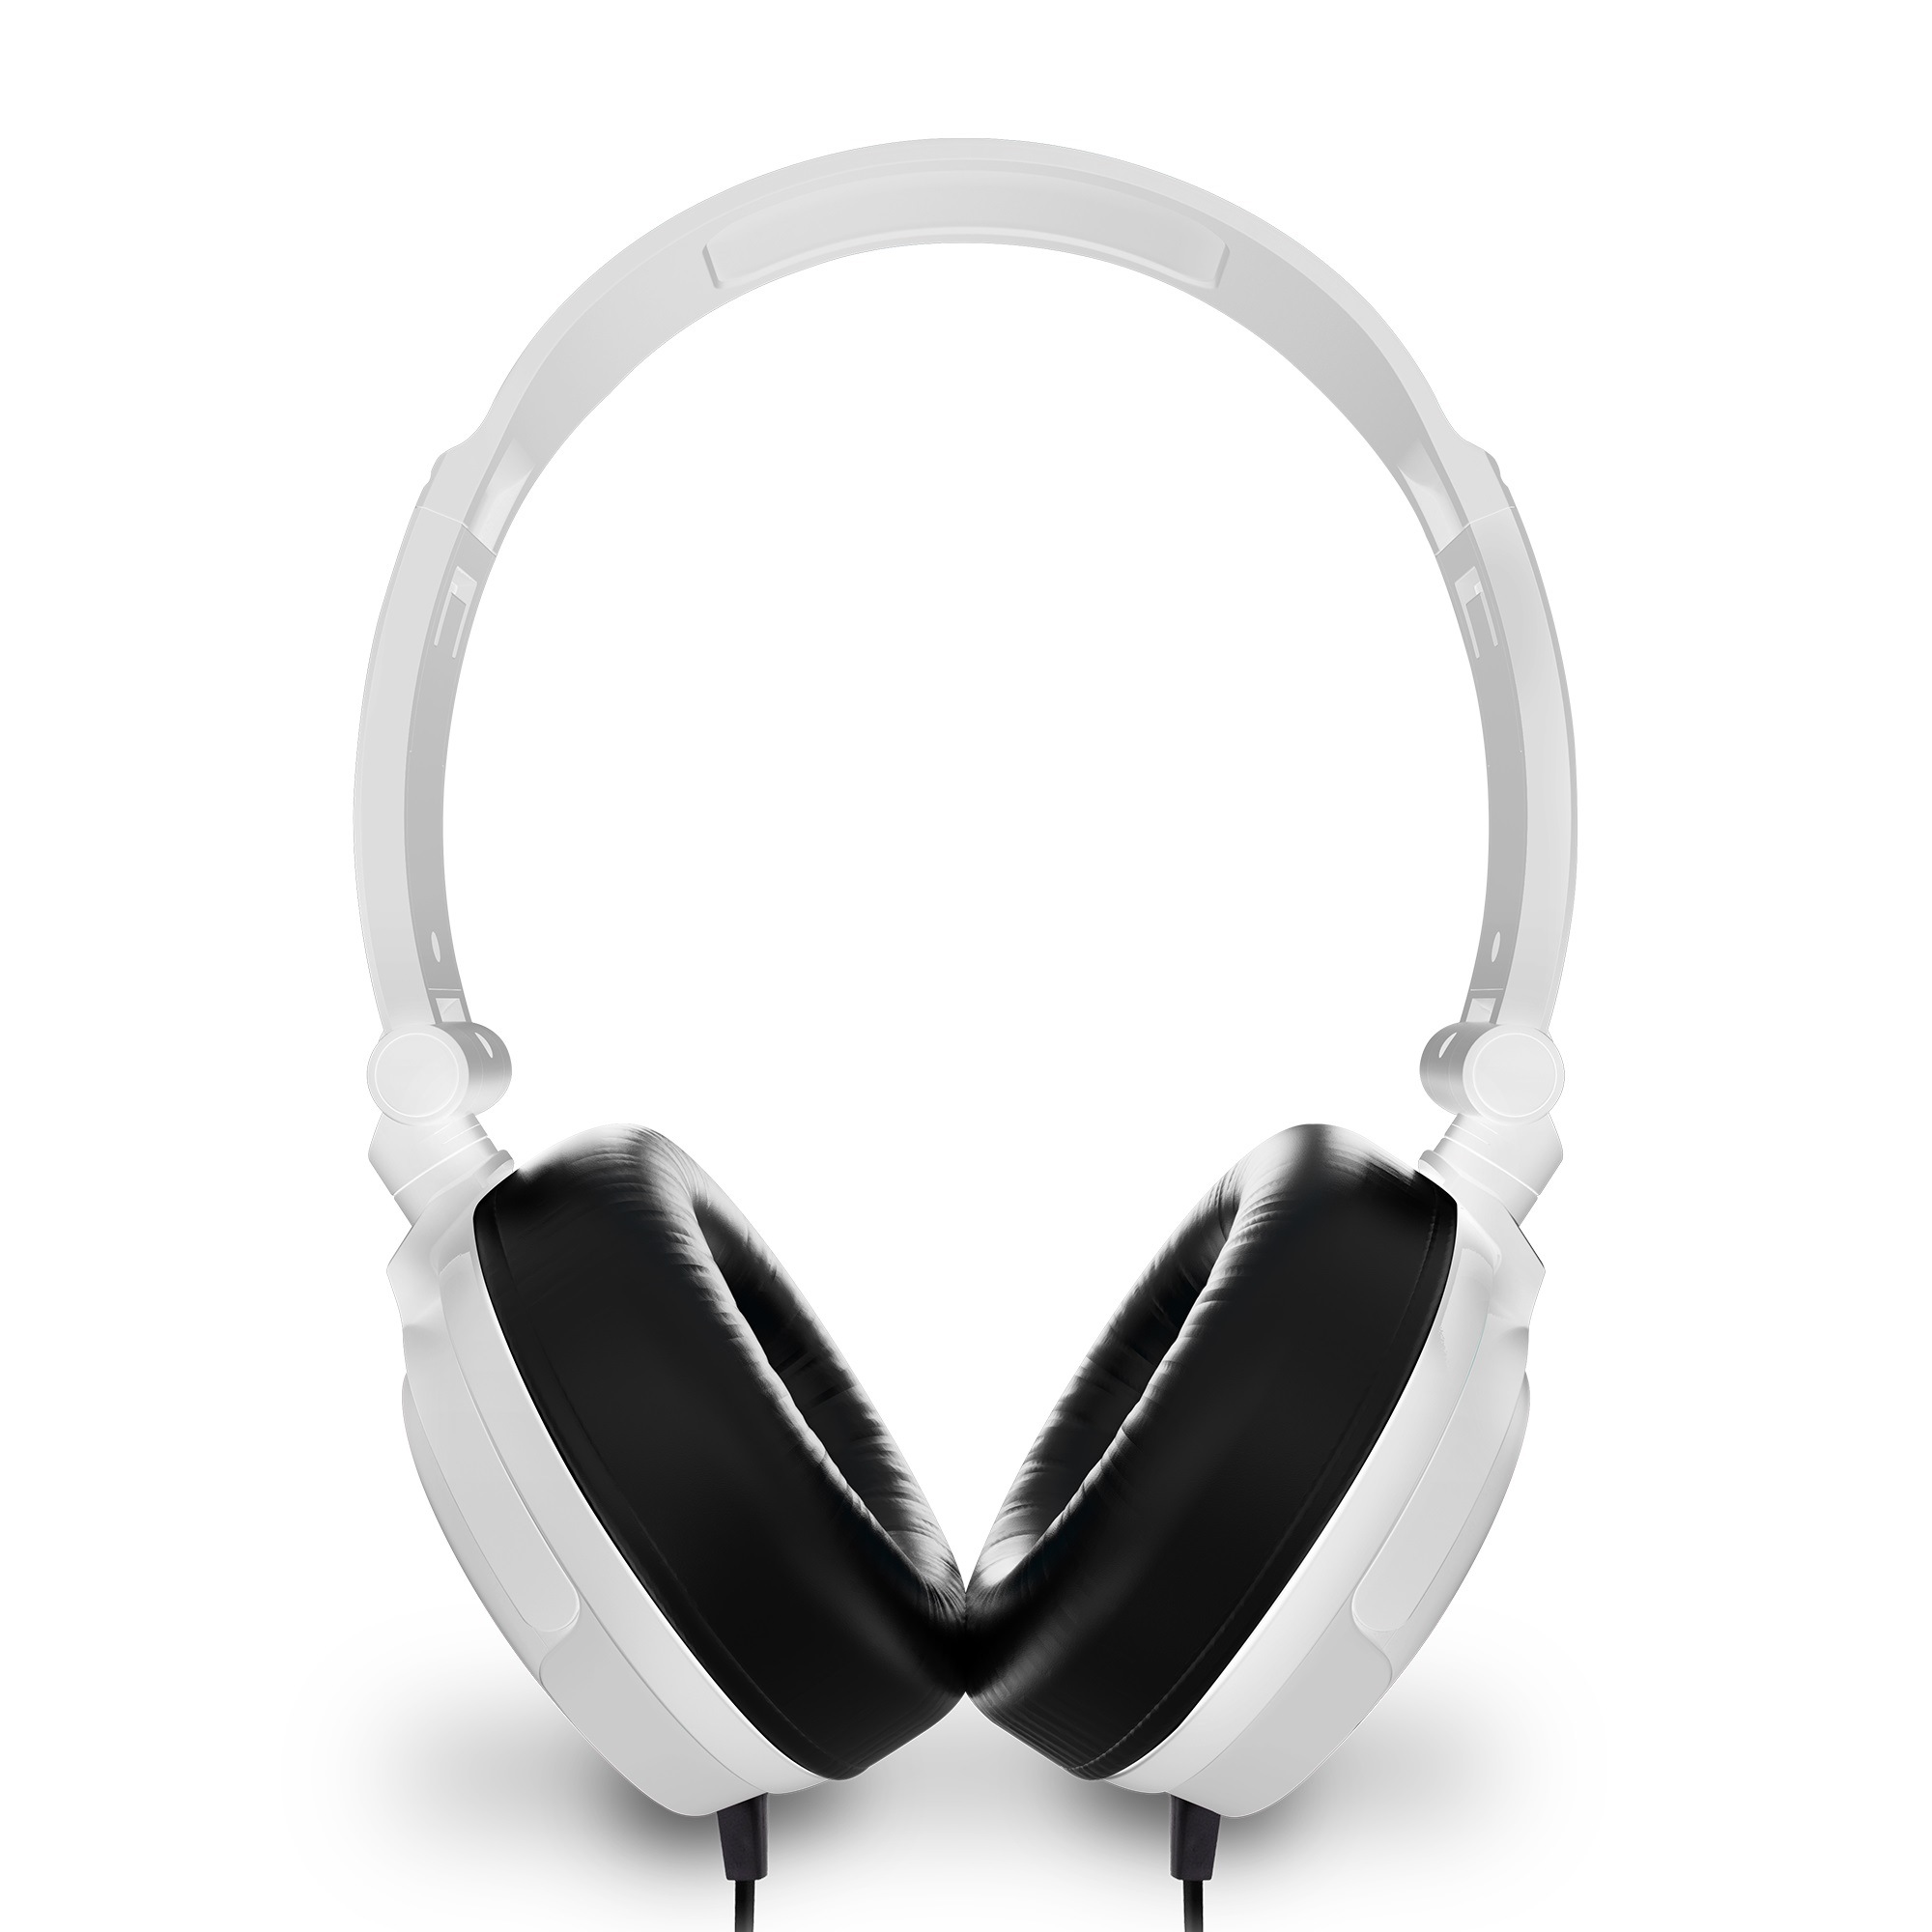 Stereo jetzt Headset Plastikfreie Verpackung Stealth Stereo-Headset kaufen bei Gaming »Multiformat OTTO C6-50«,